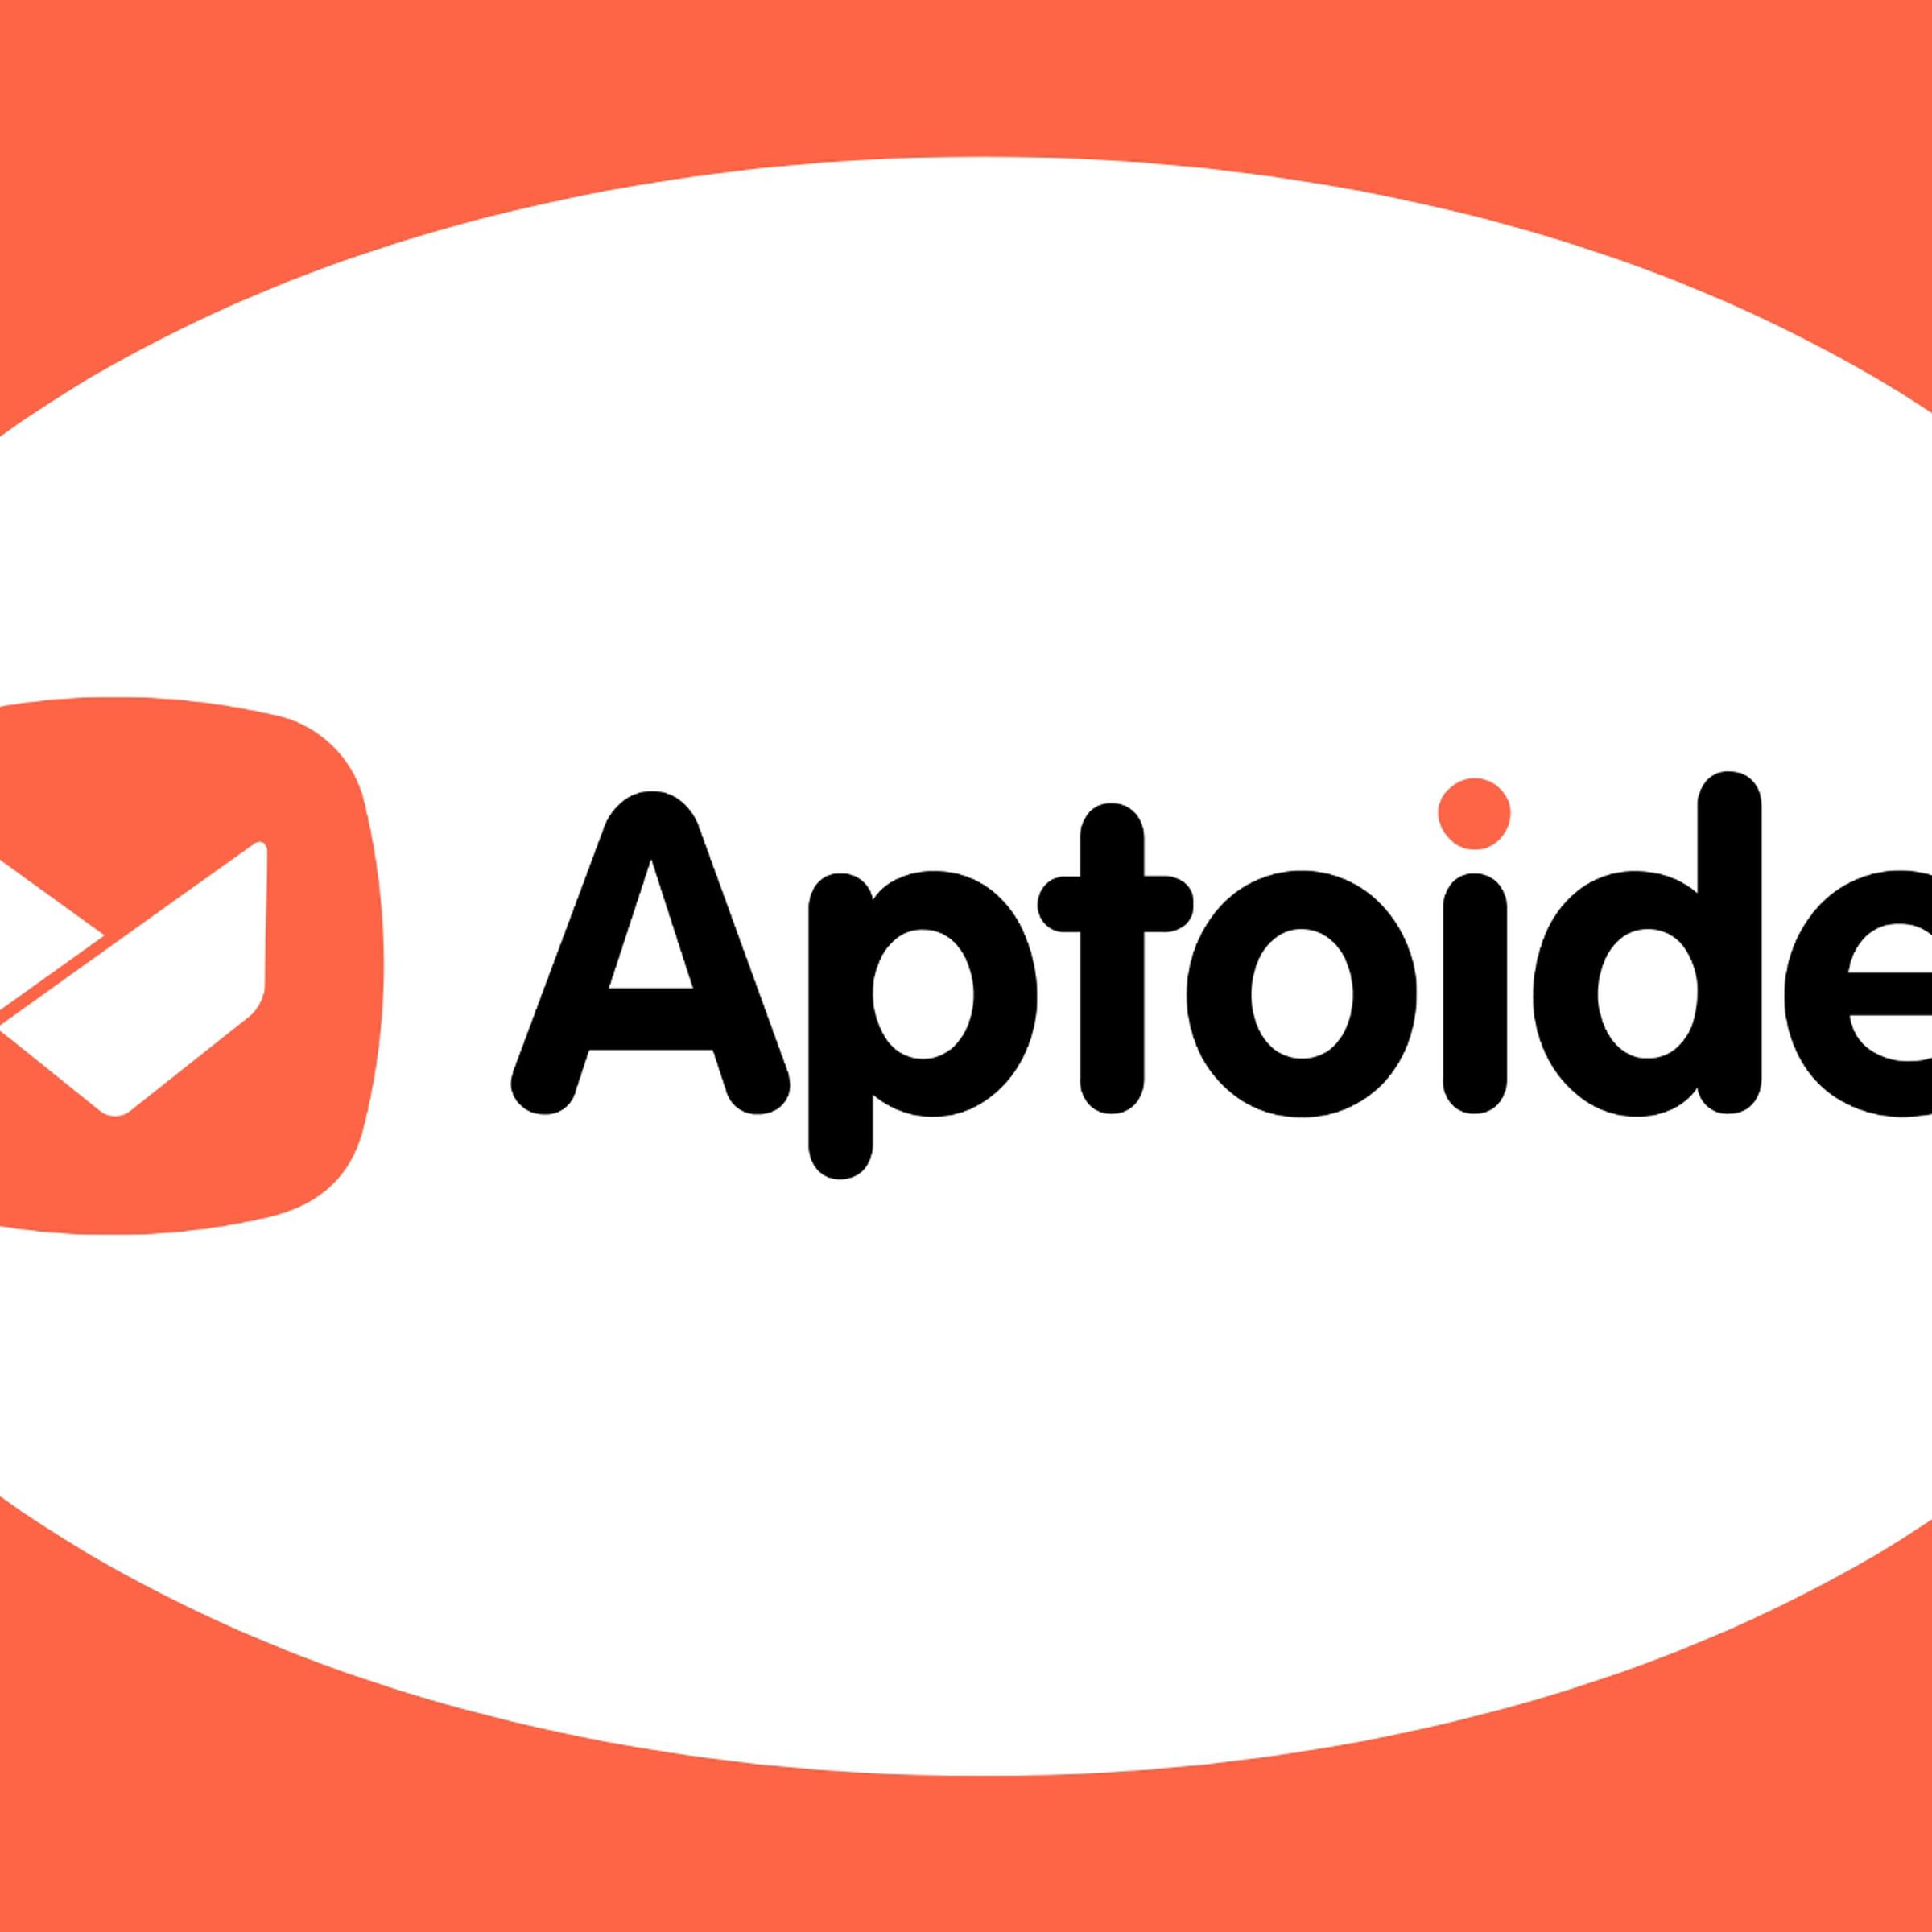 The Aptoide logo against a white, round background.